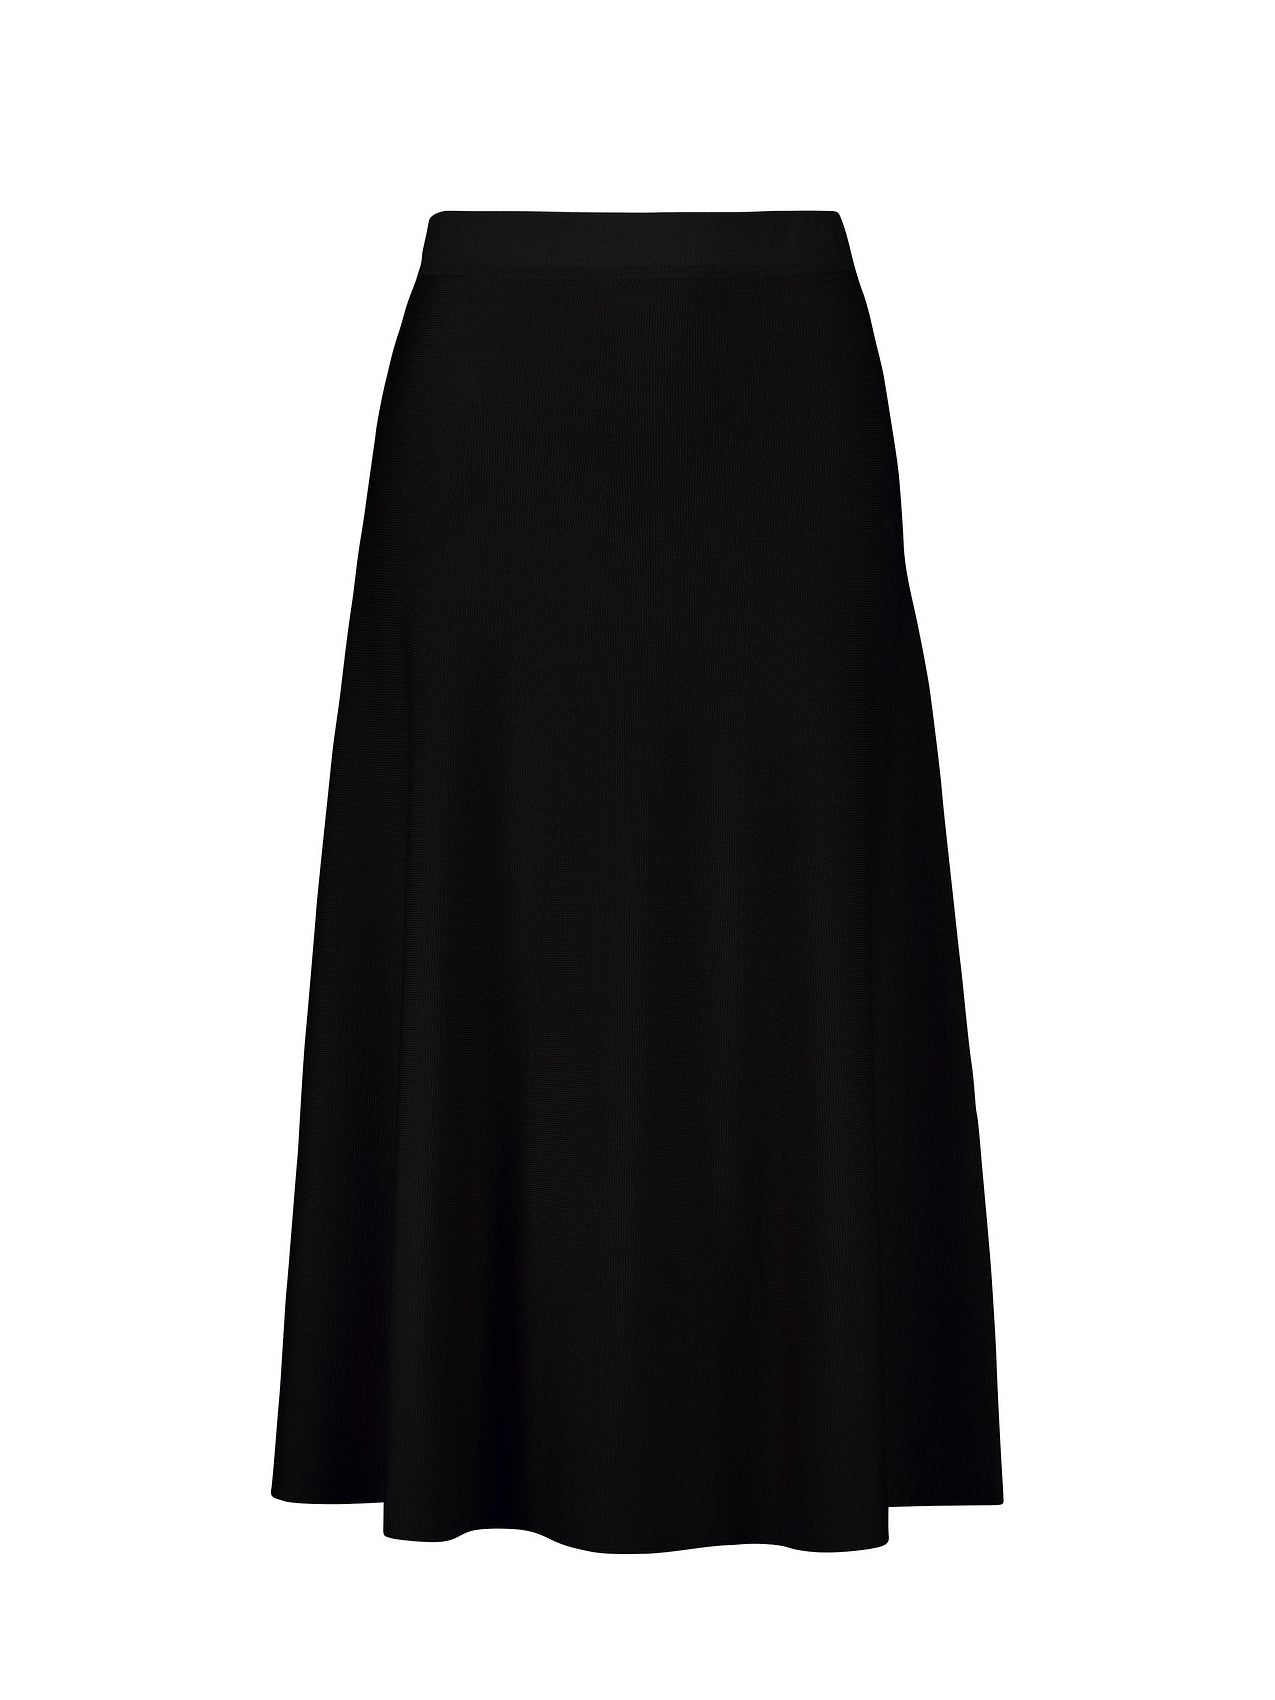 Wool A-line skirt, black